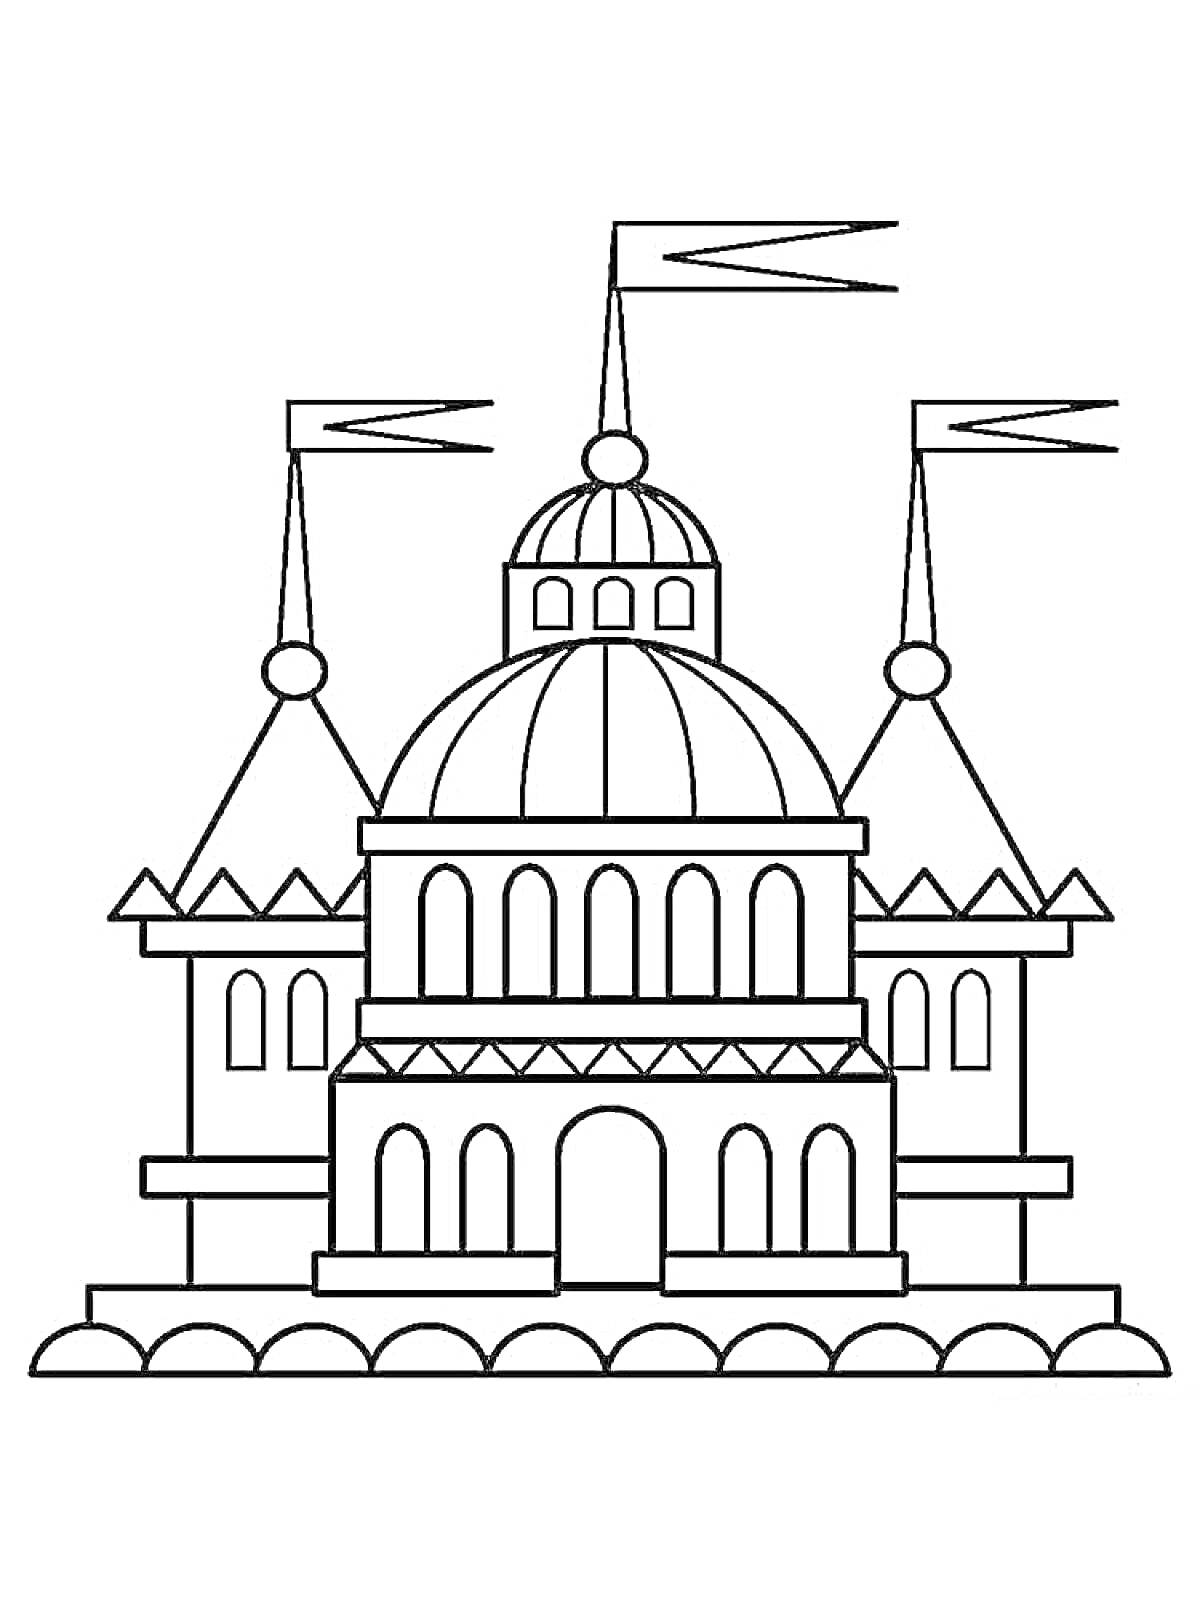 Раскраска Замок с куполом и башнями с флагами